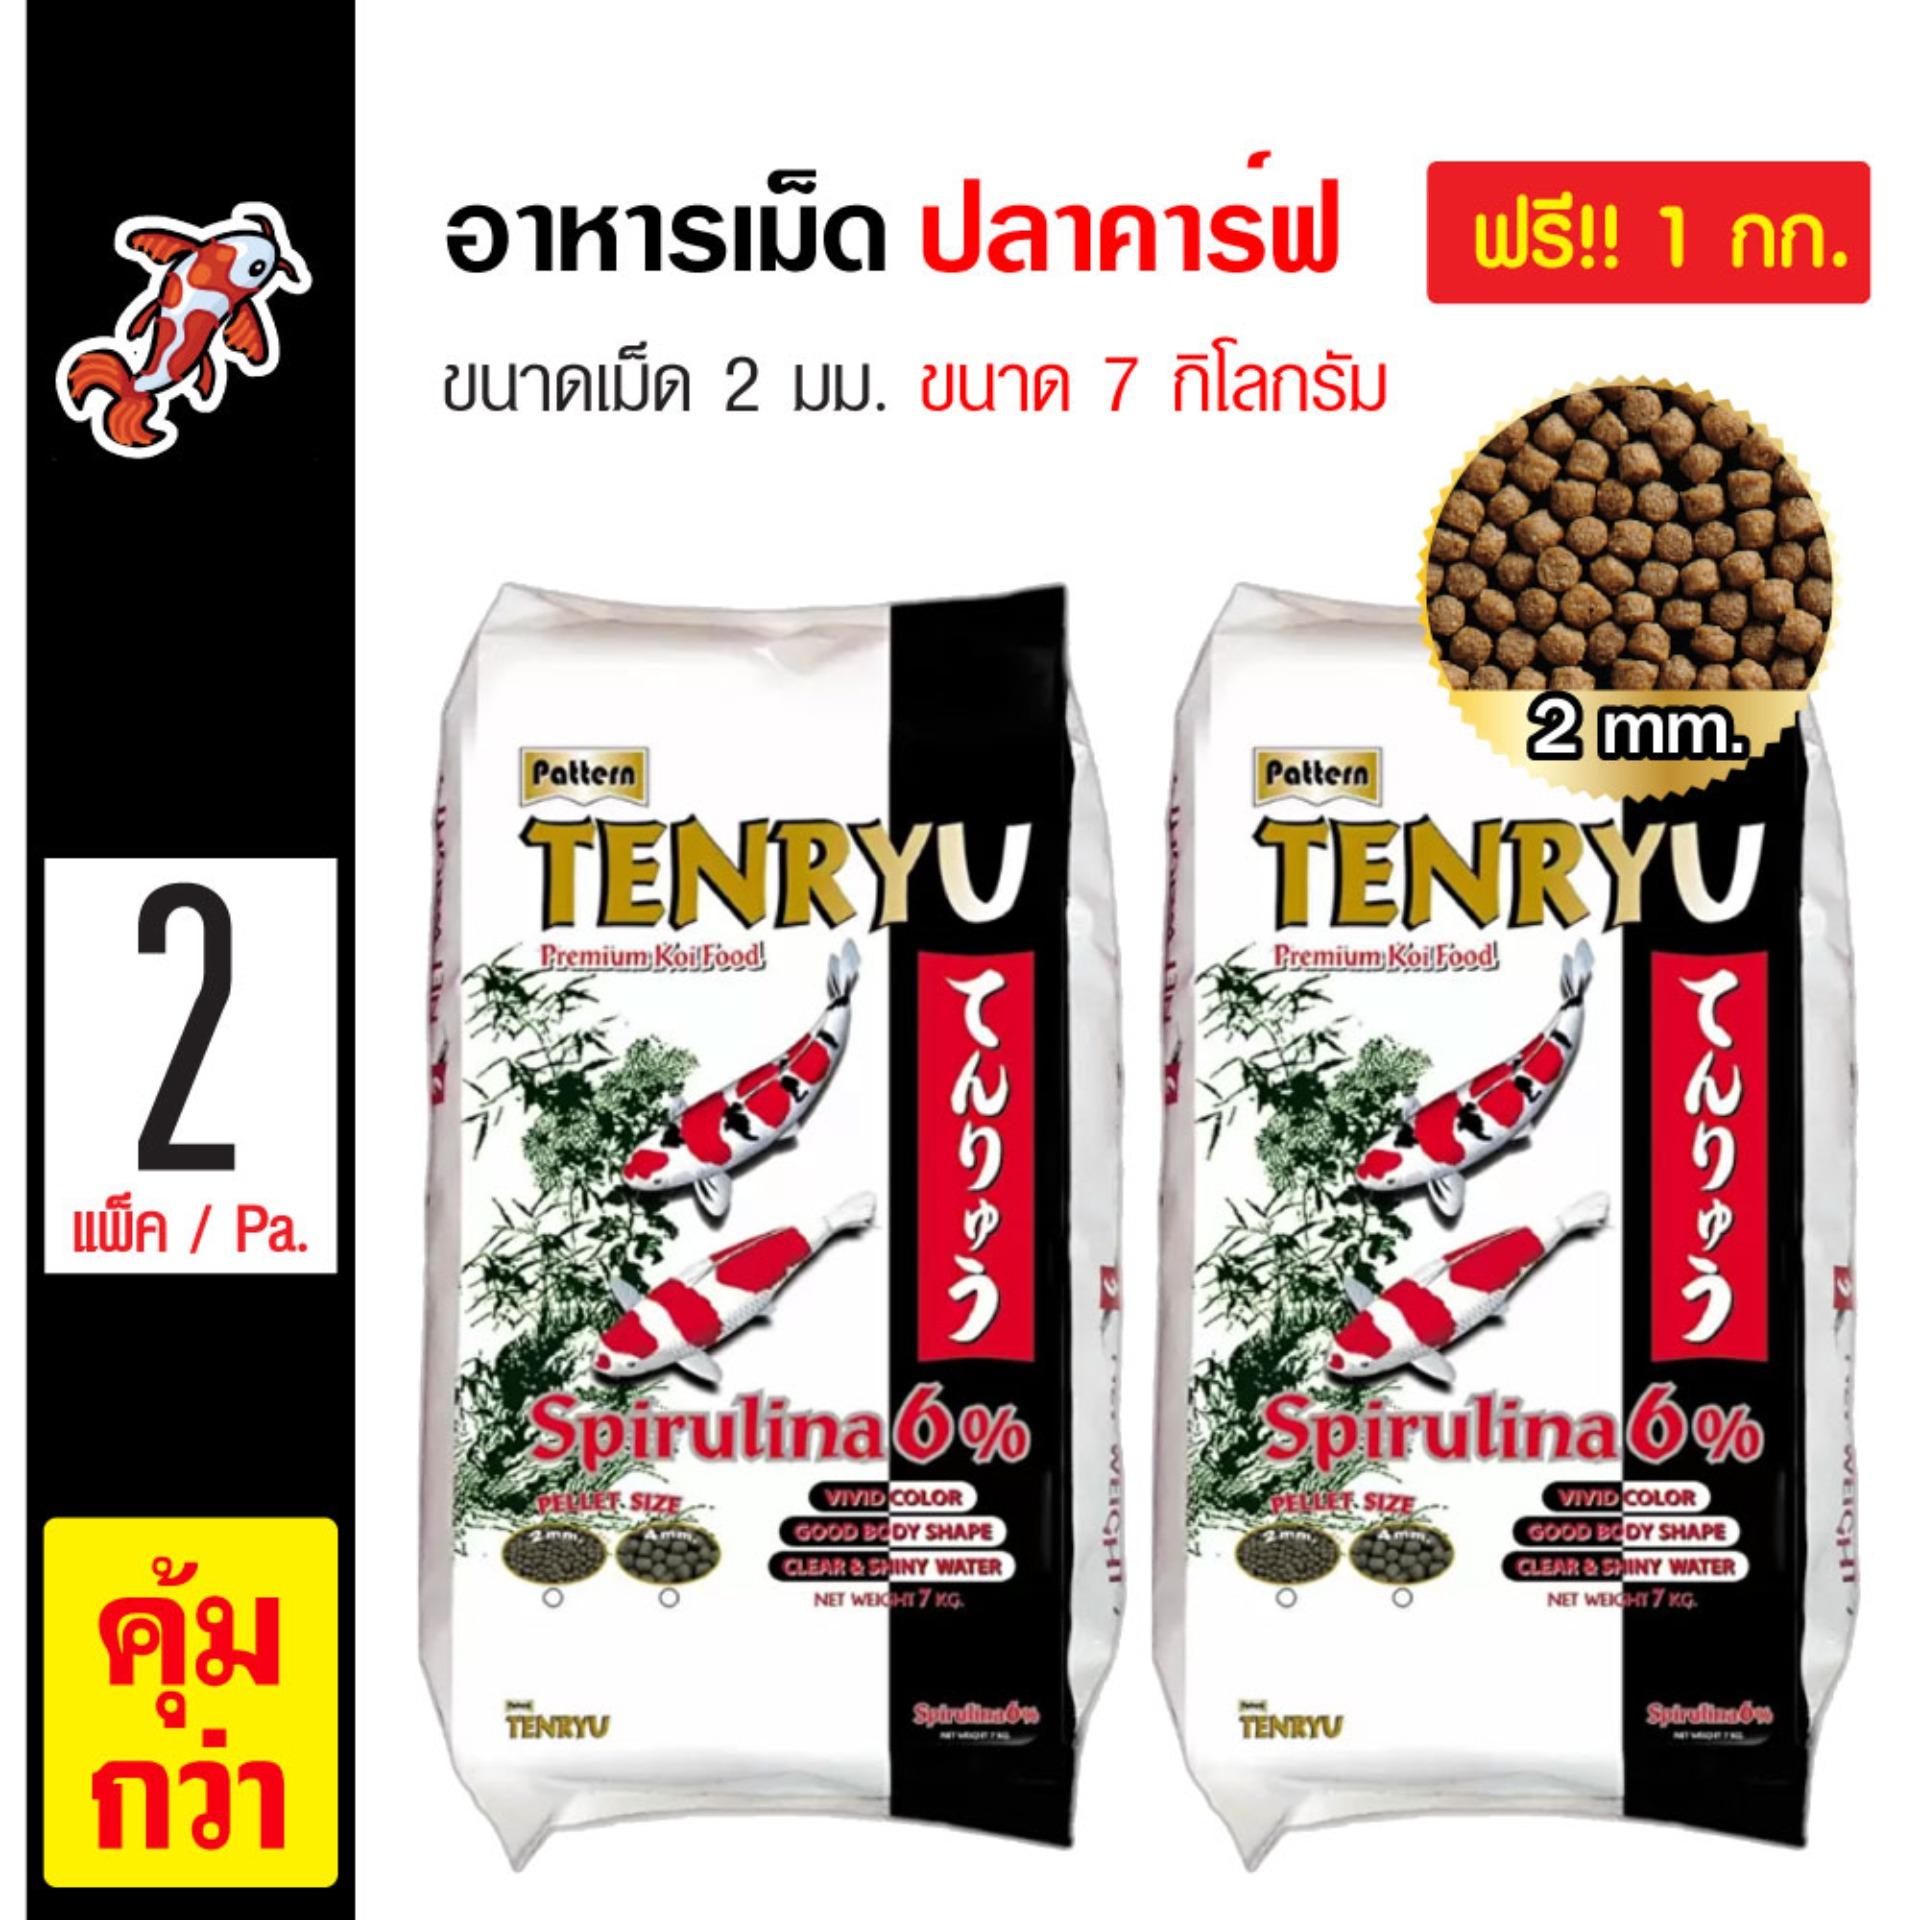 Tenryu Premium อาหารปลา อาหารปลาคาร์ฟ สูตรพรีเมี่ยม ไม่ทำให้น้ำขุ่น ขนาดเม็ด 2 มม. (7 กิโลกรัม/ กระส